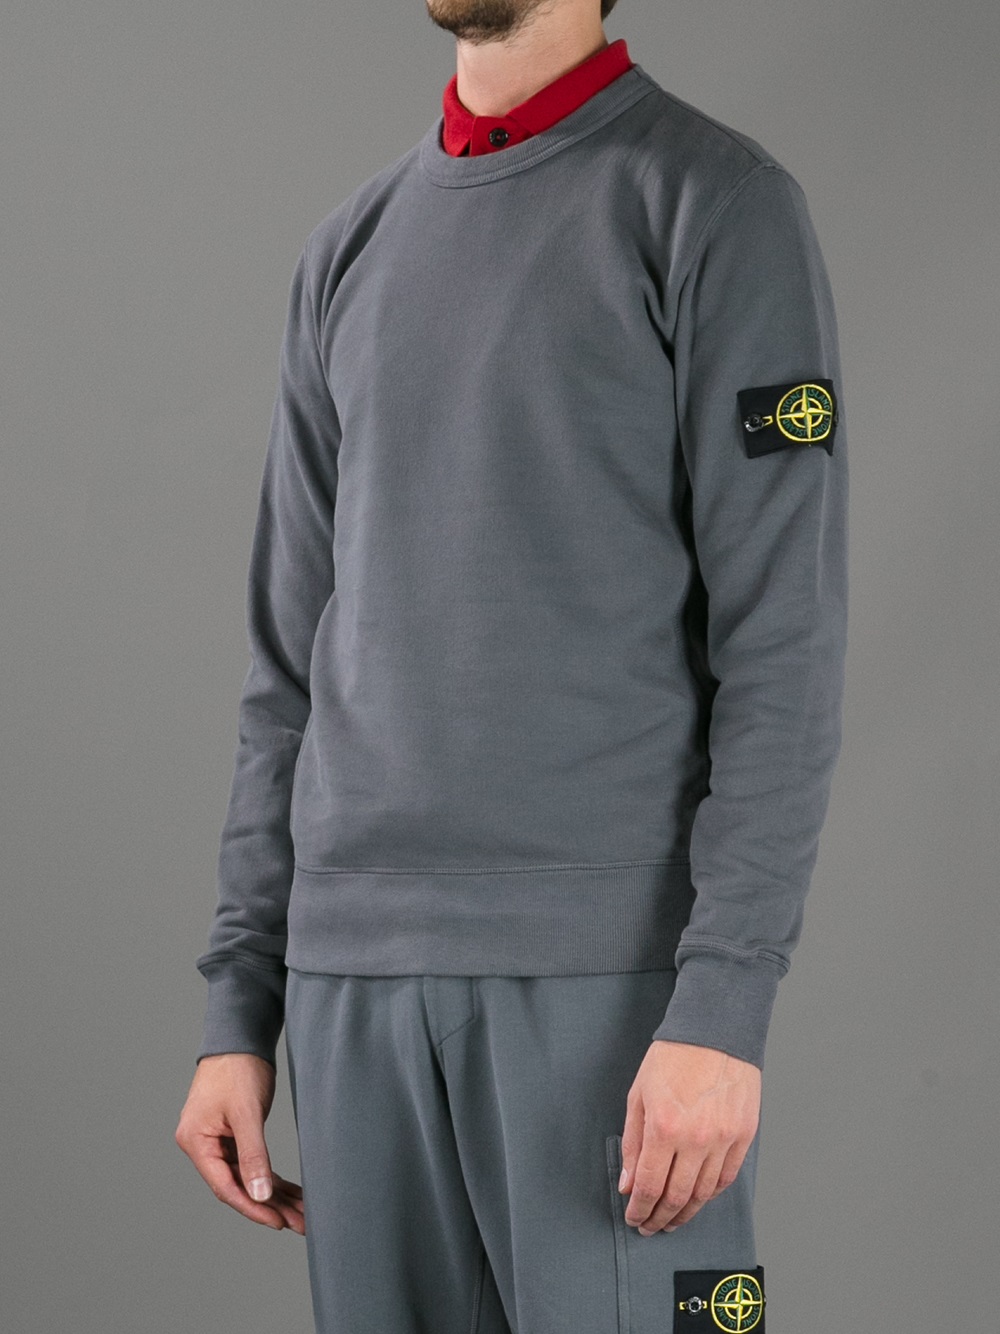 Stone Island Crew Neck Sweatshirt in Grey (Gray) for Men - Lyst